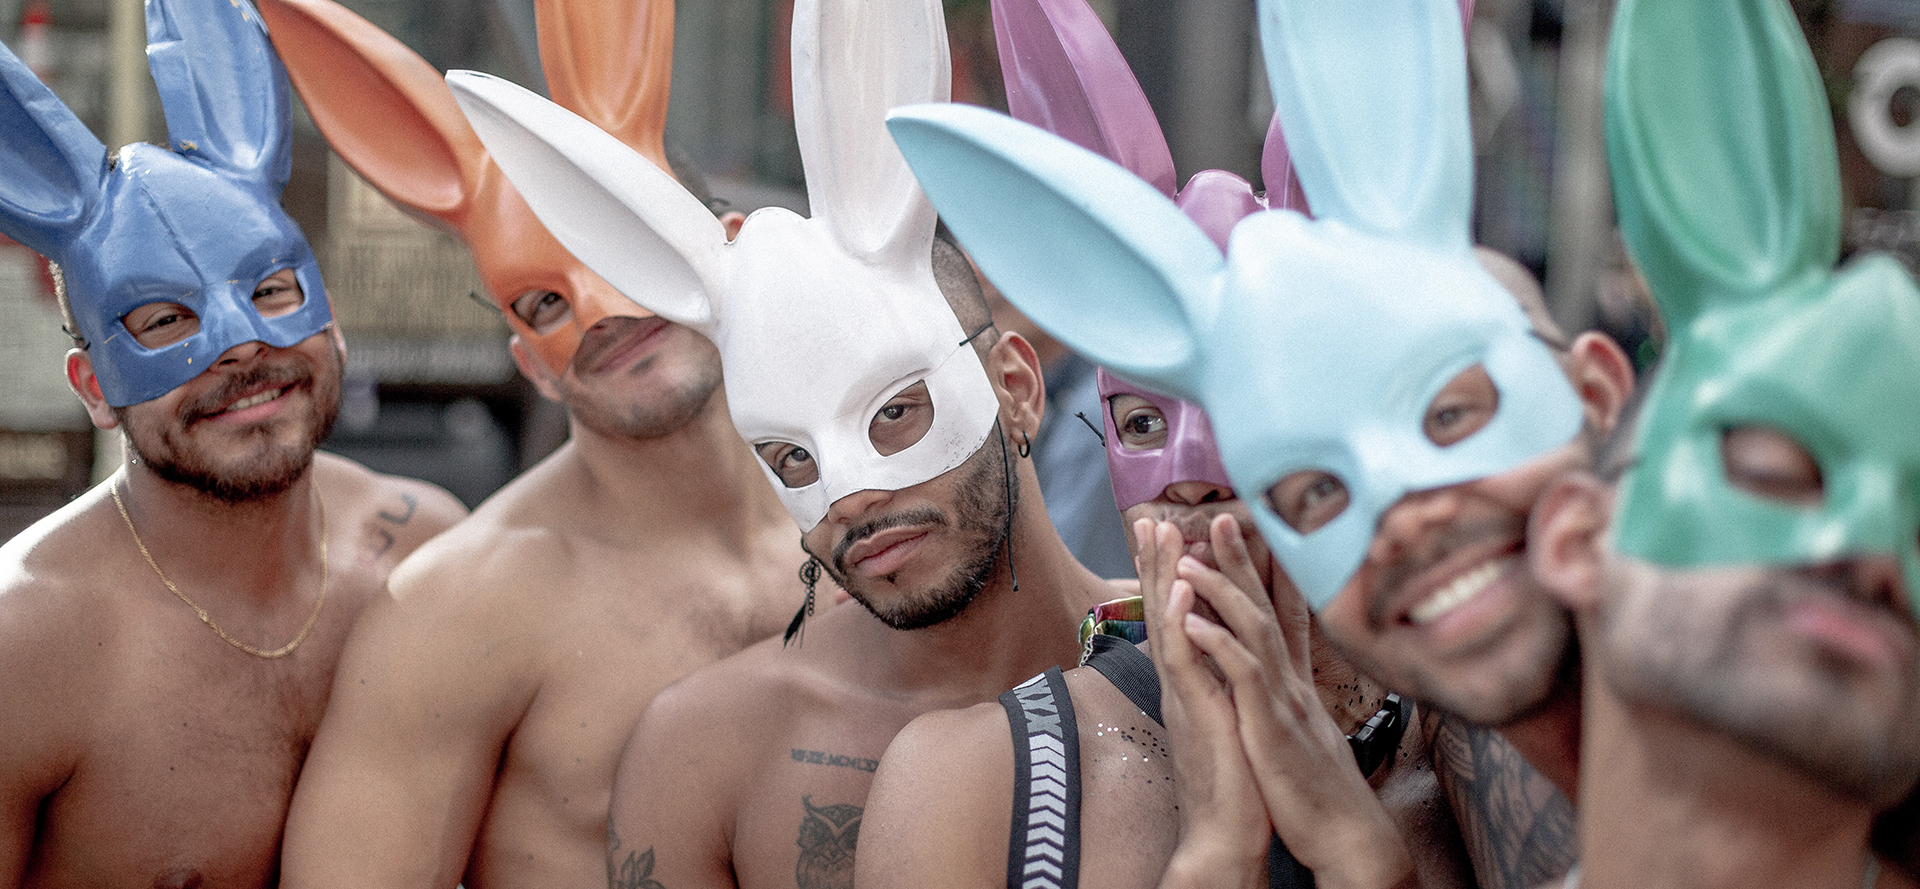 Men in a rabbit mask.